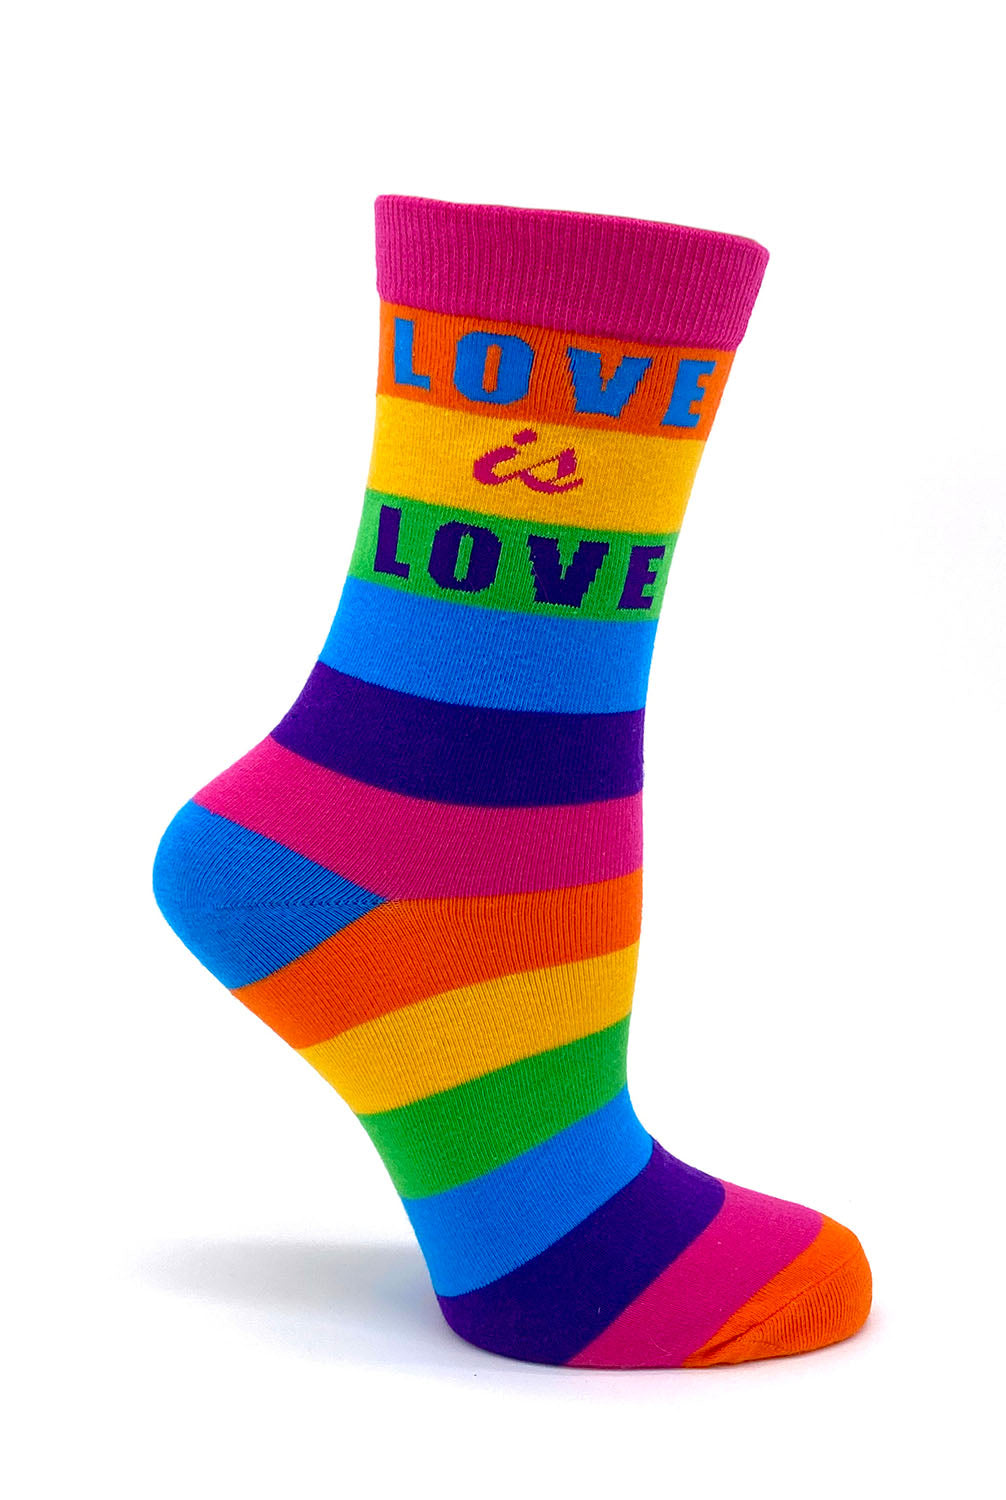 LOVE is LOVE gay pride lgbtq Women's cotton crew socks 